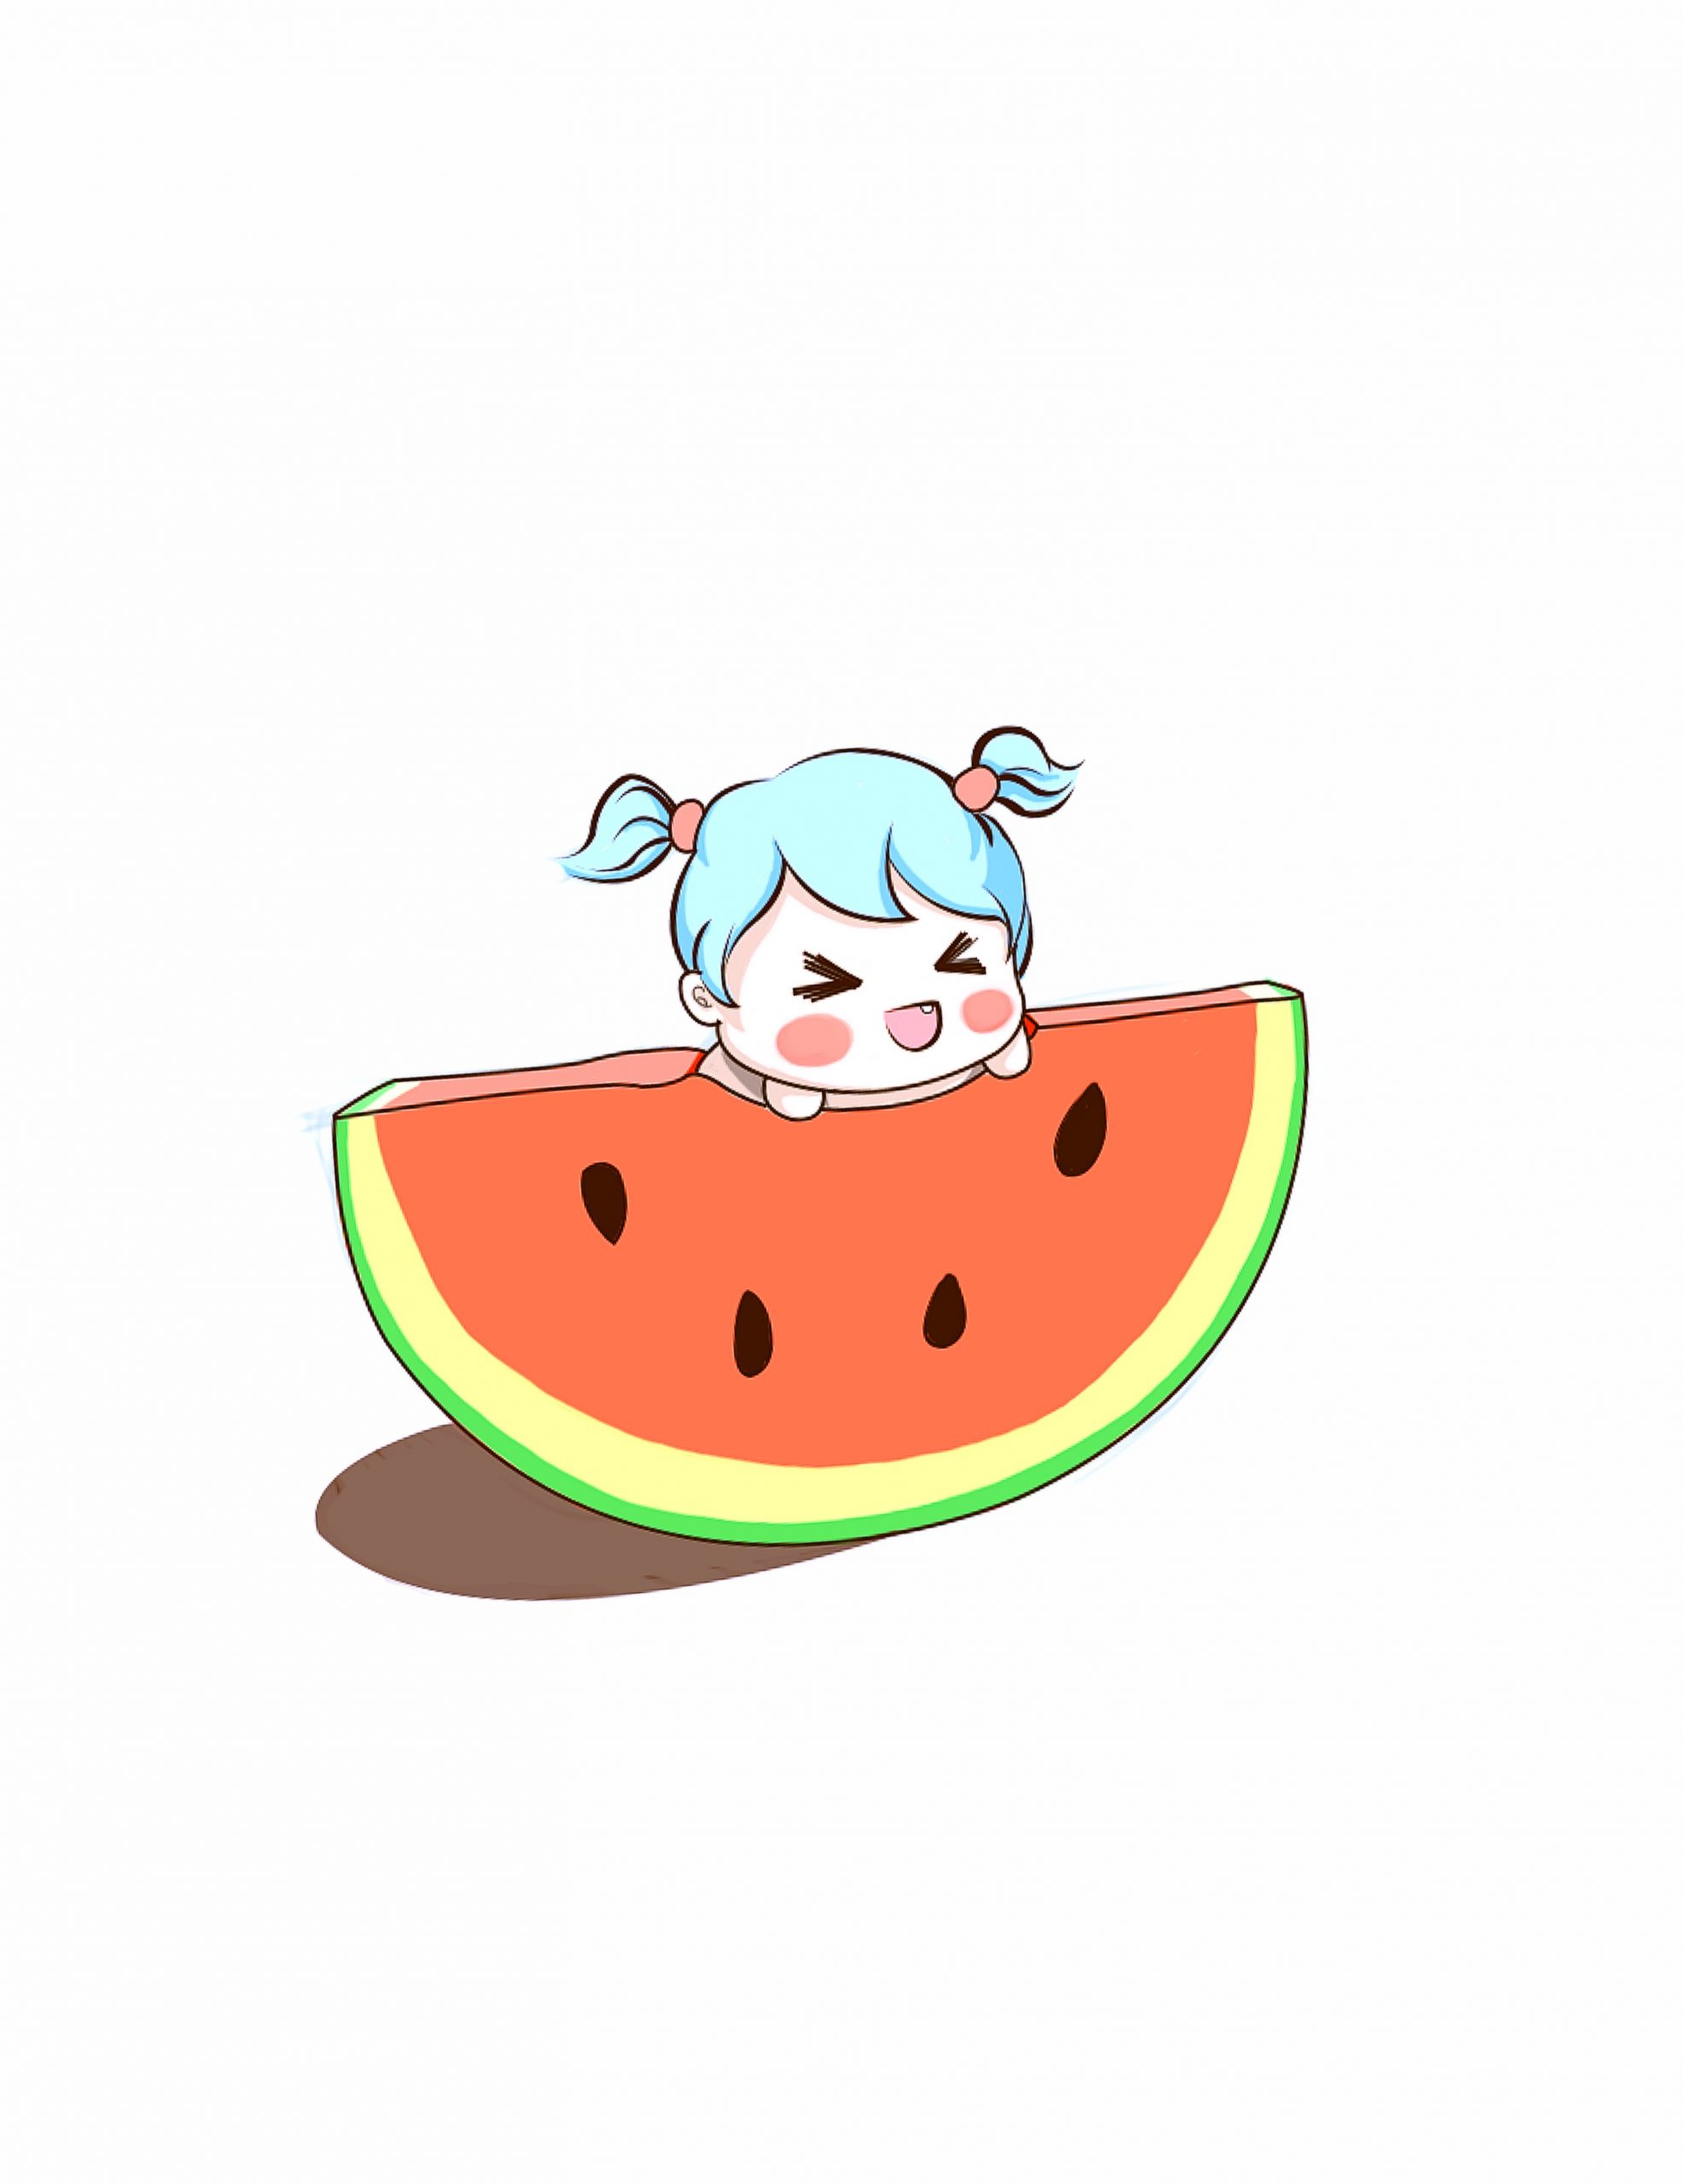 A kid eating watermelon